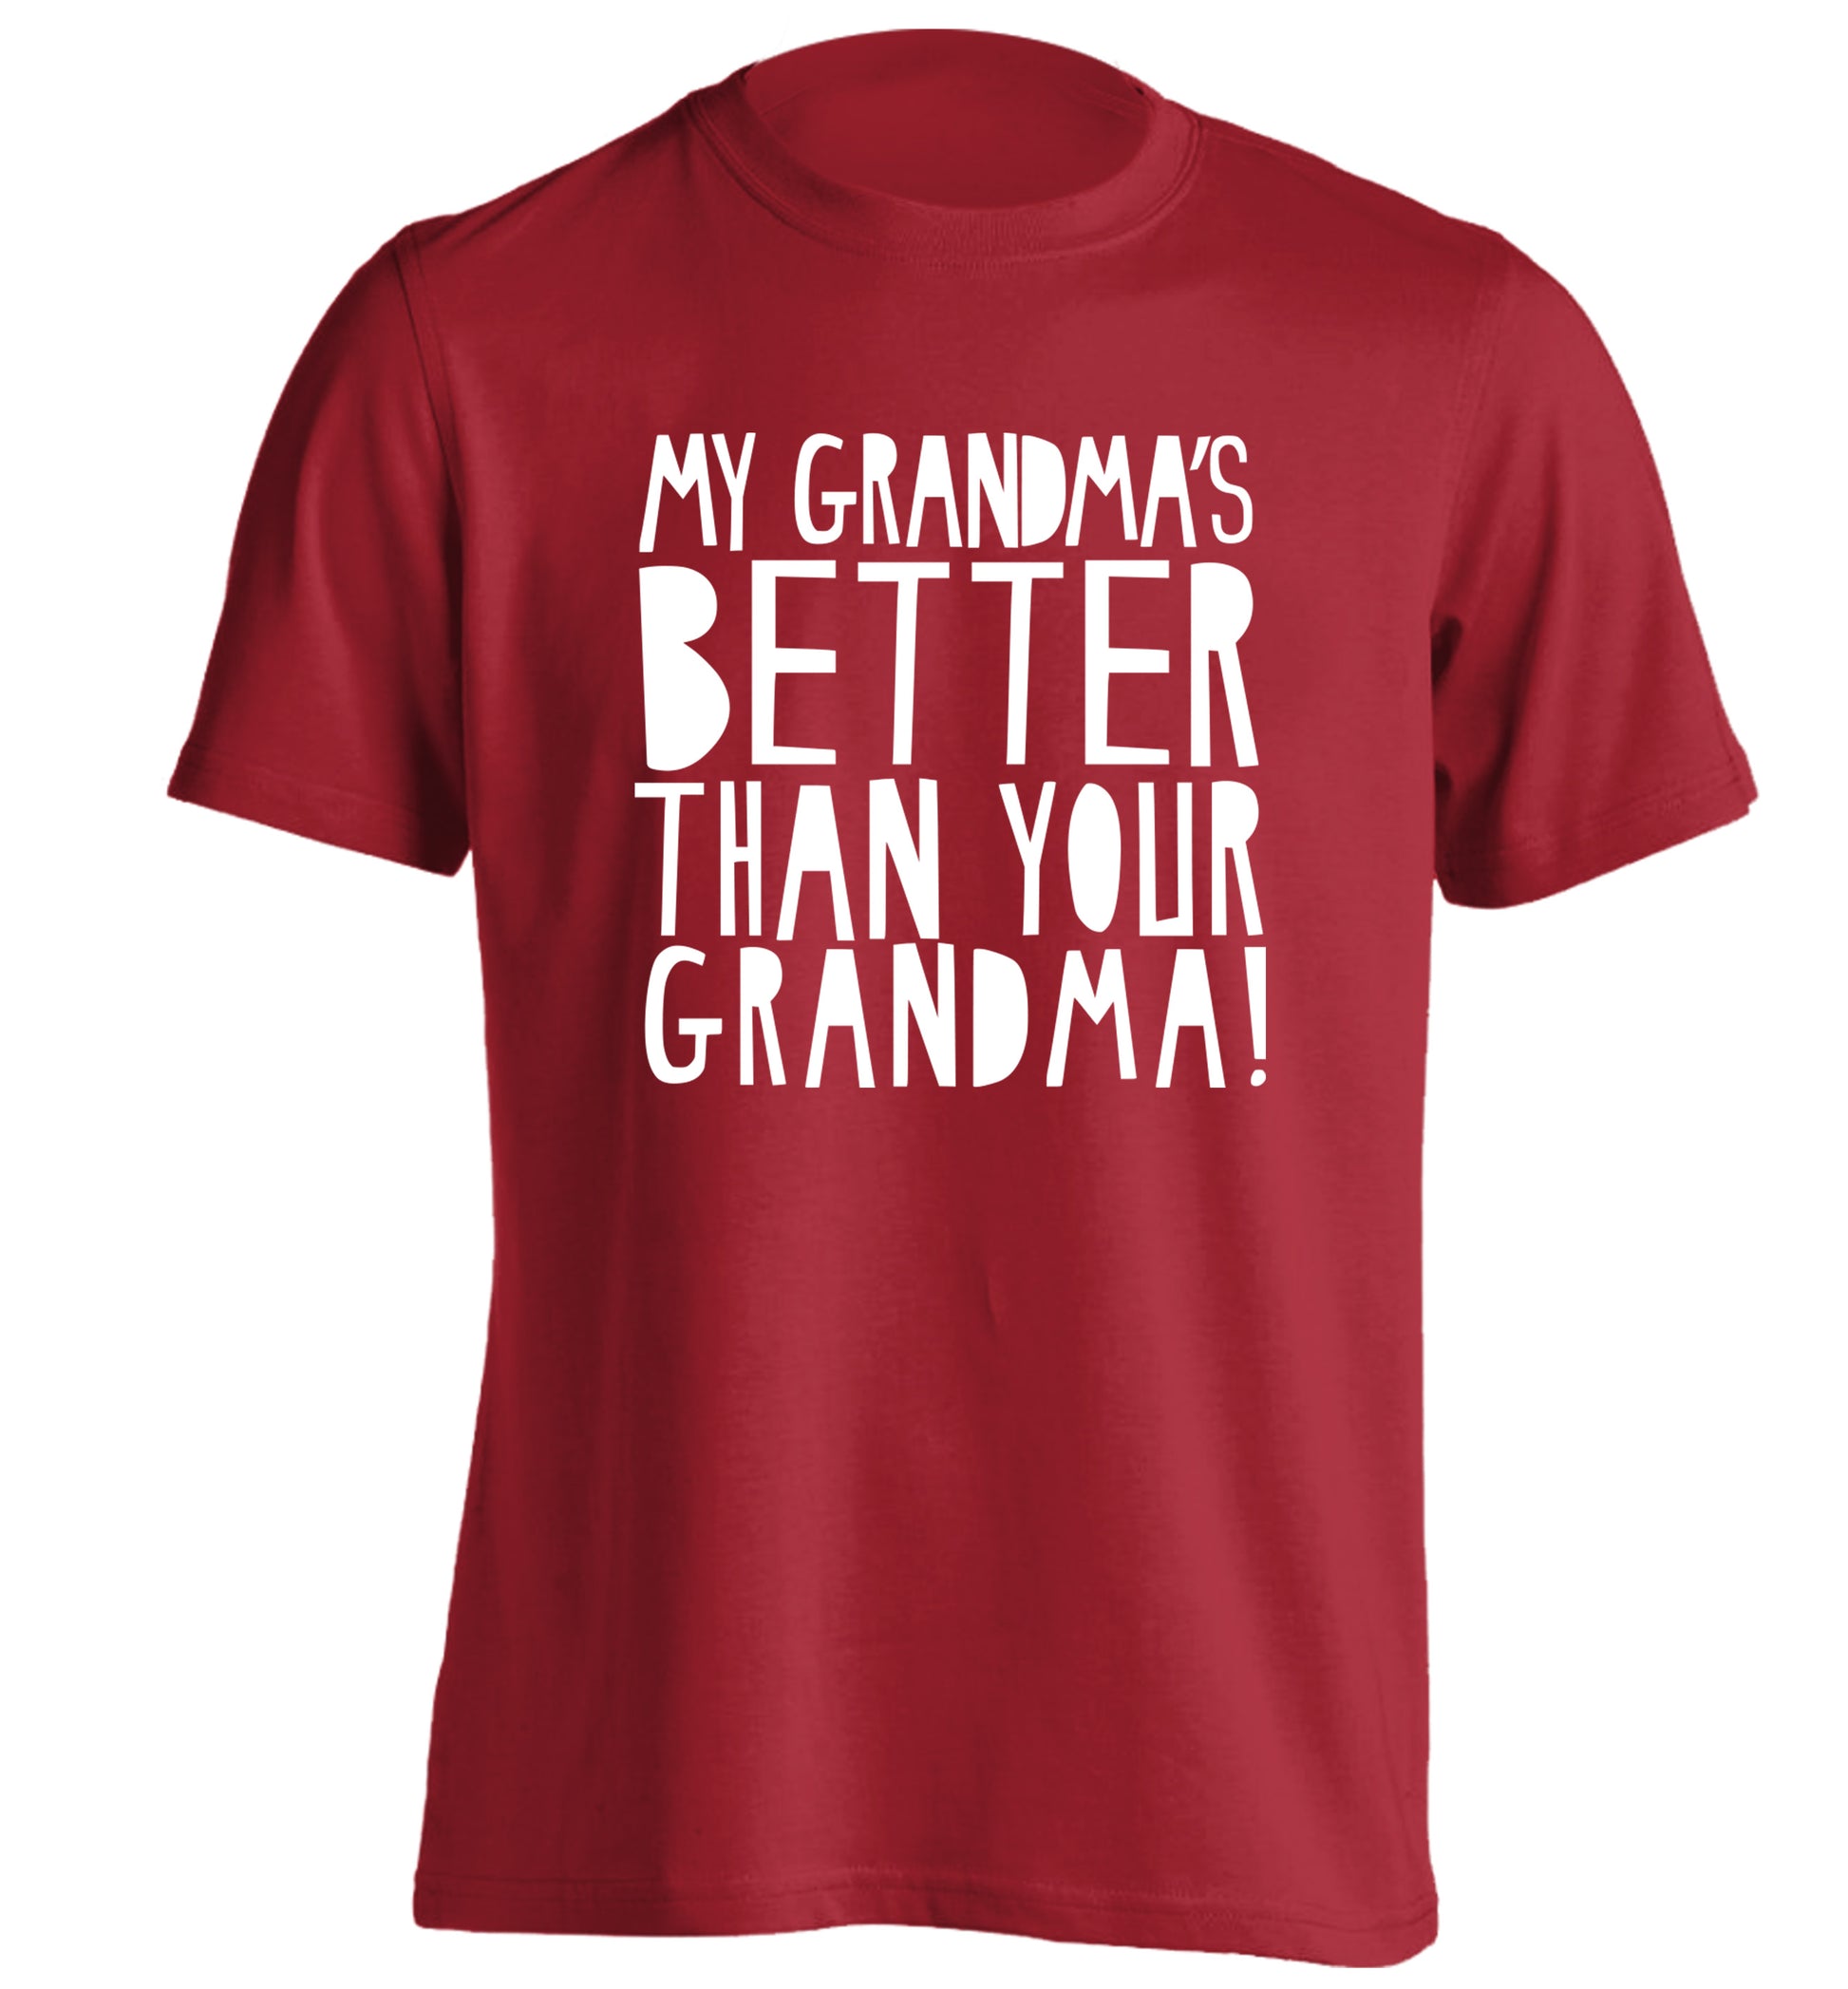 My grandma's better than your grandma adults unisex red Tshirt 2XL